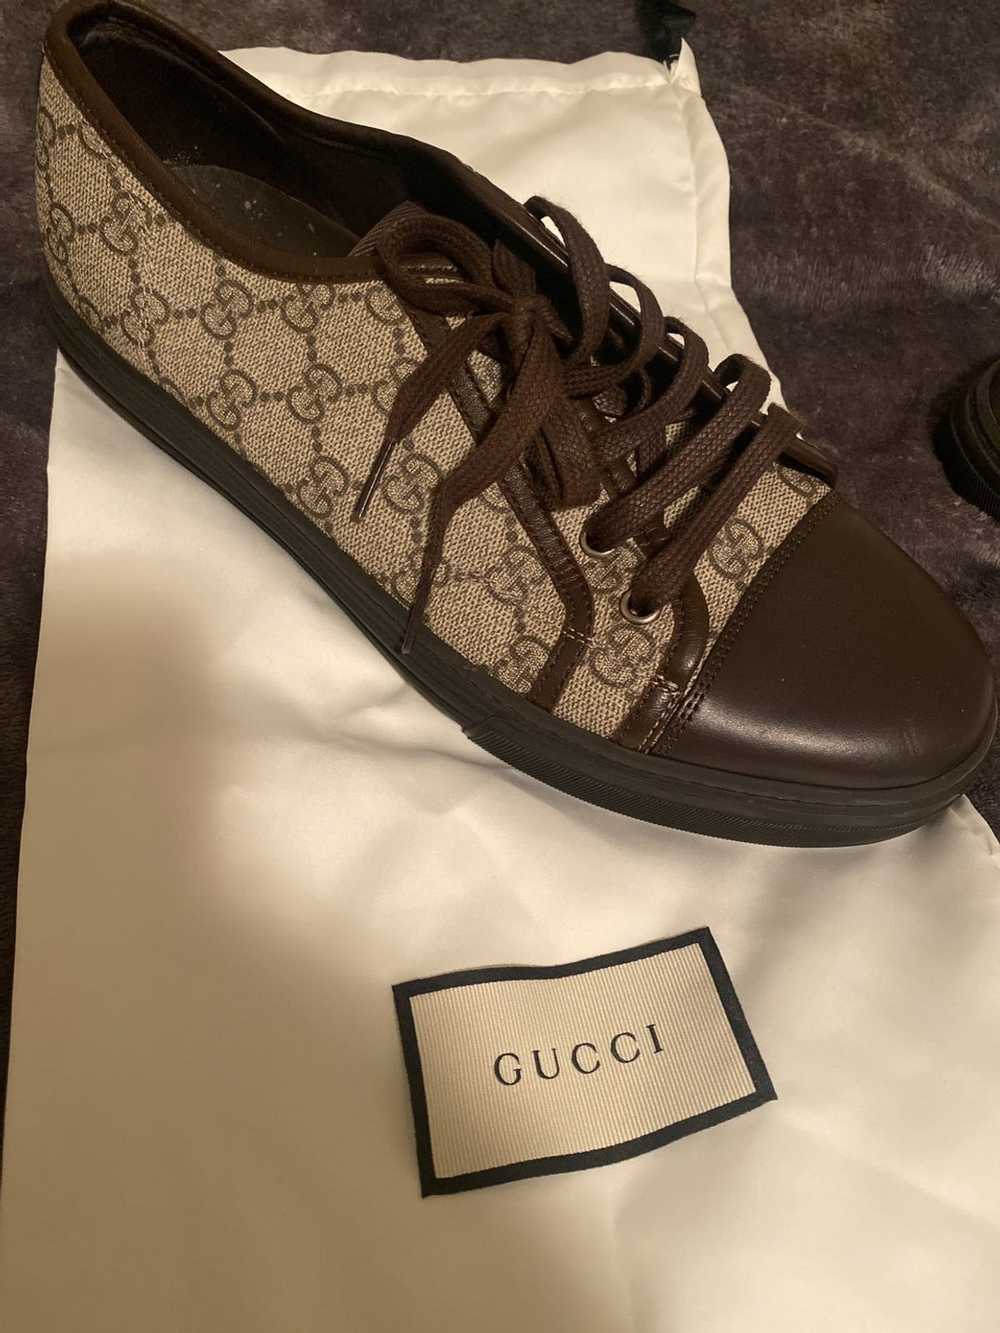 Gucci Gucci Shoes - image 2